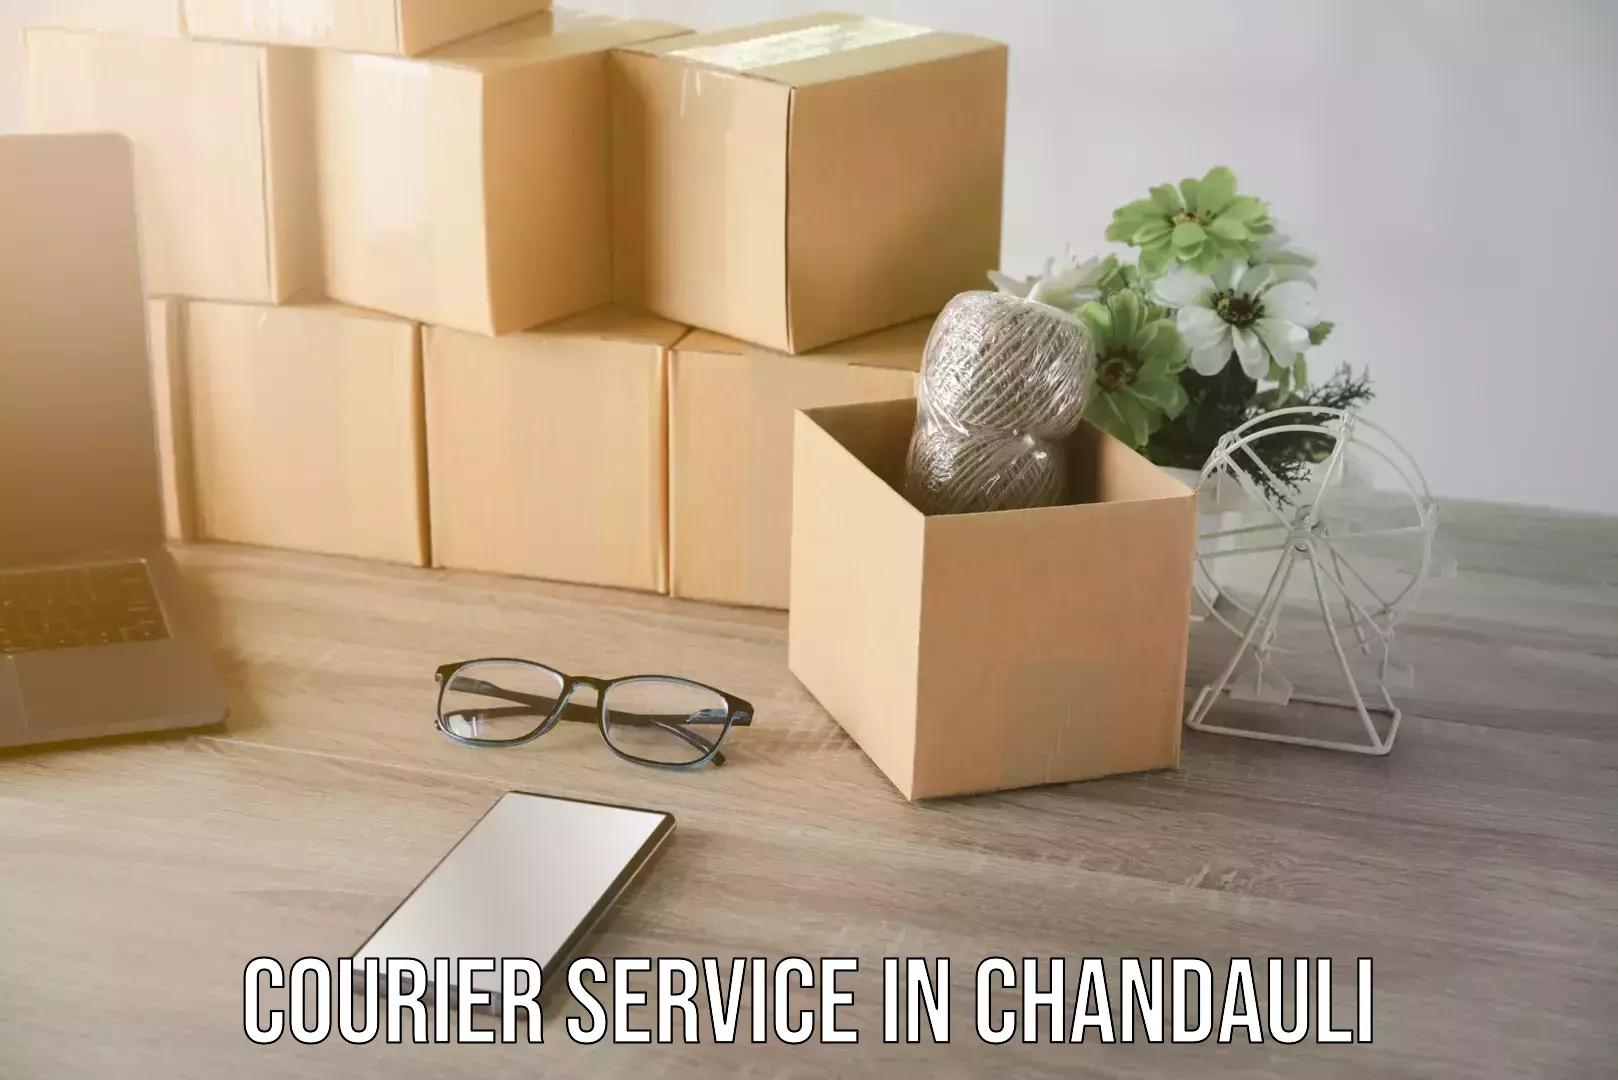 Customer-focused courier in Chandauli